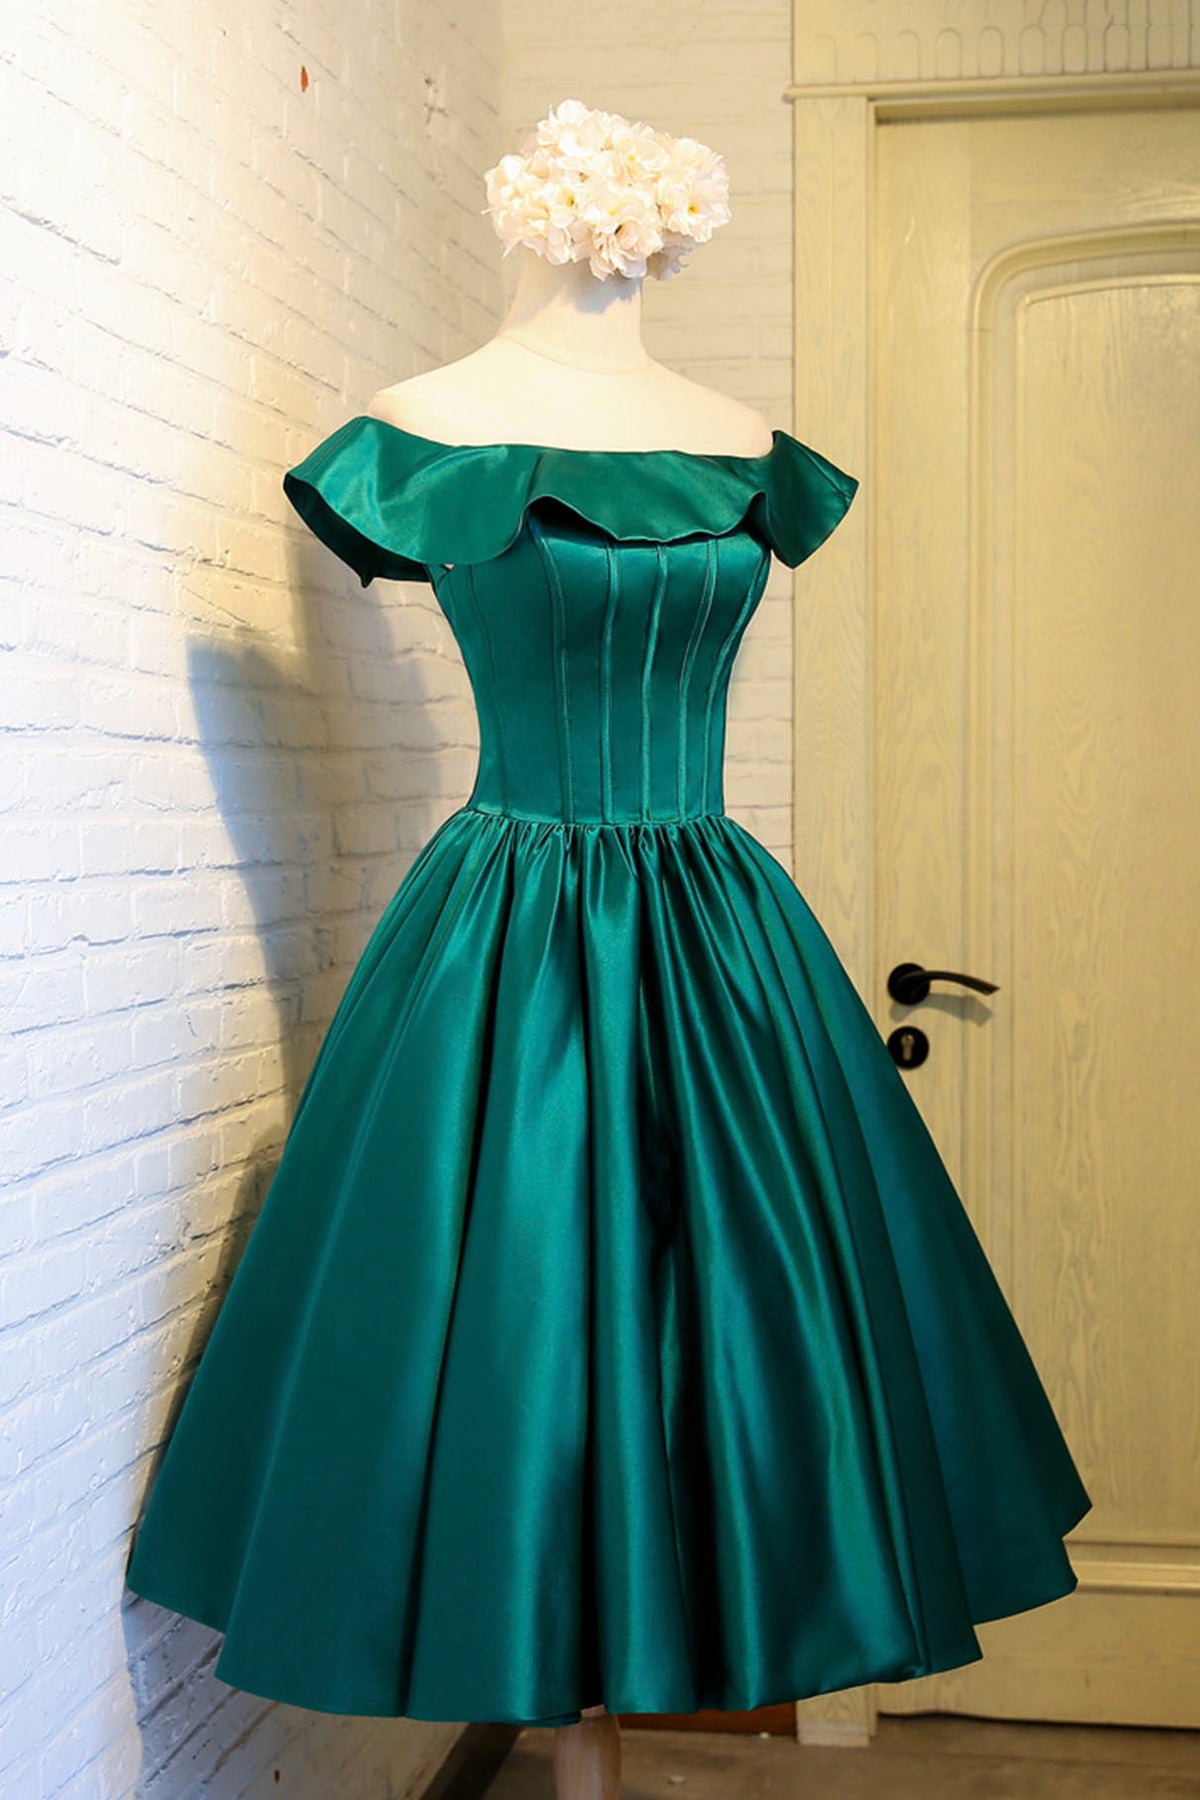 Green Satin Short Homecoming Dress, Cute Off the Shoulder Knee Length Prom Dress